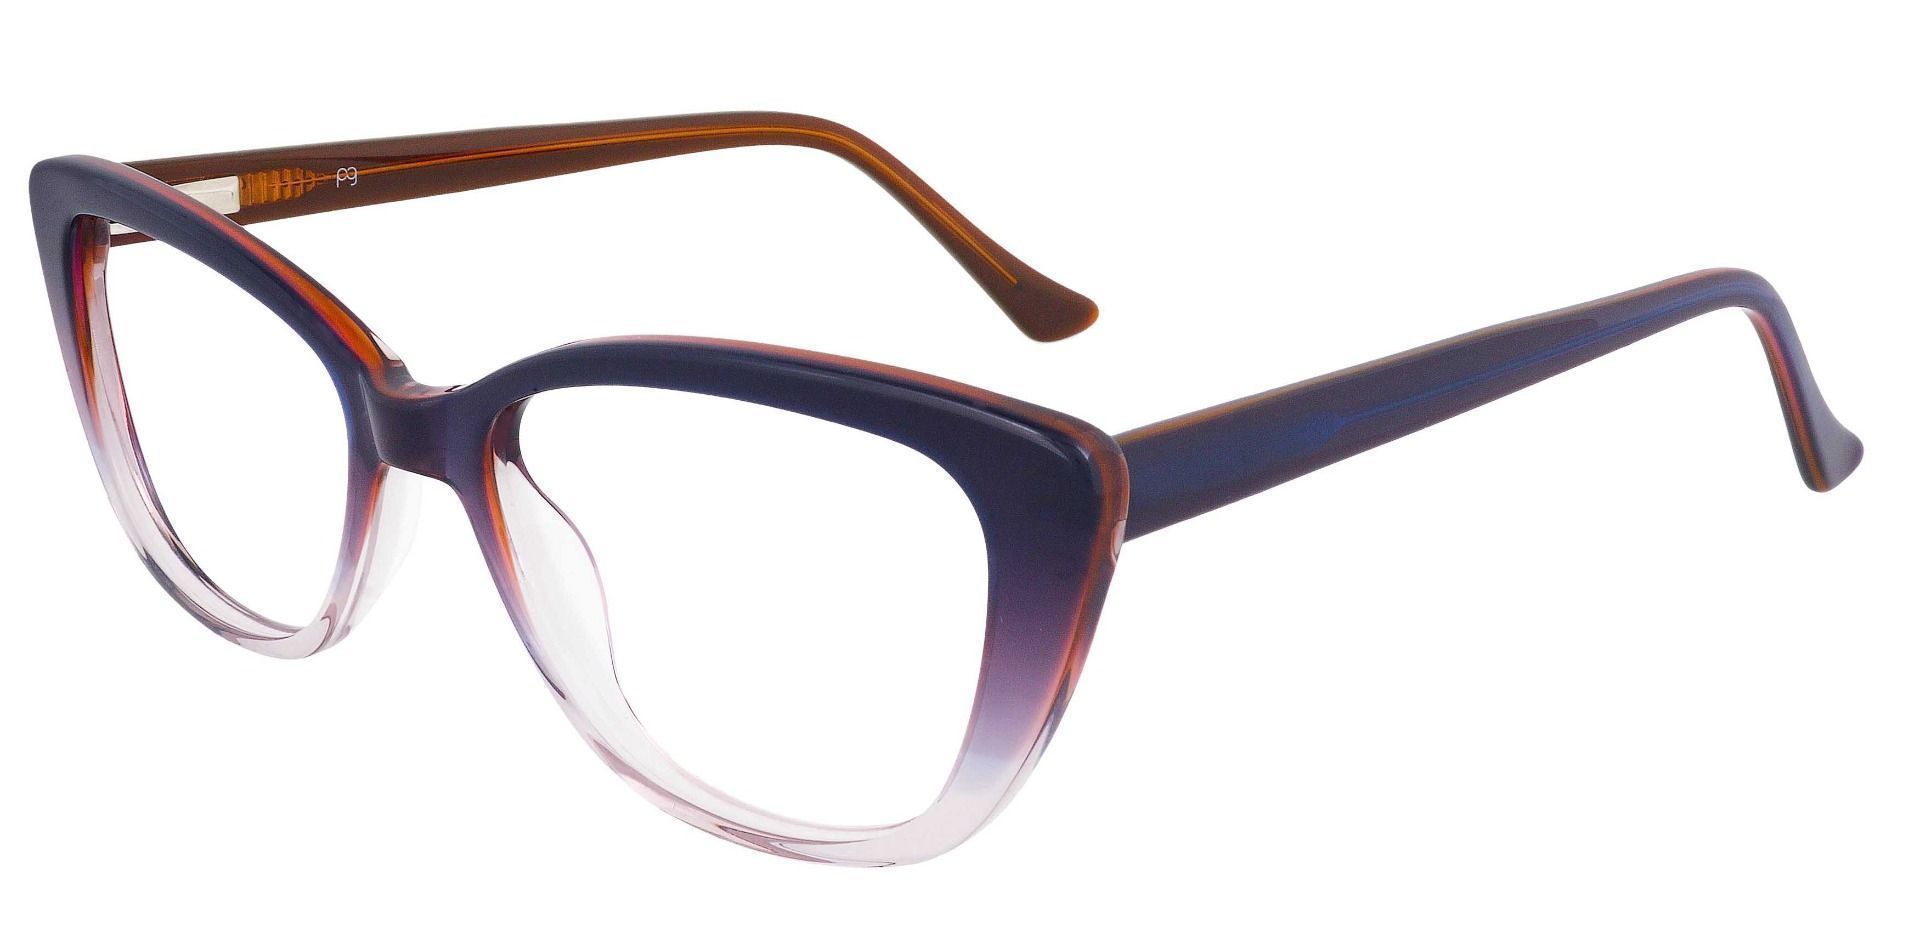 Athena Cat-Eye Eyeglasses Frame - Multi Color